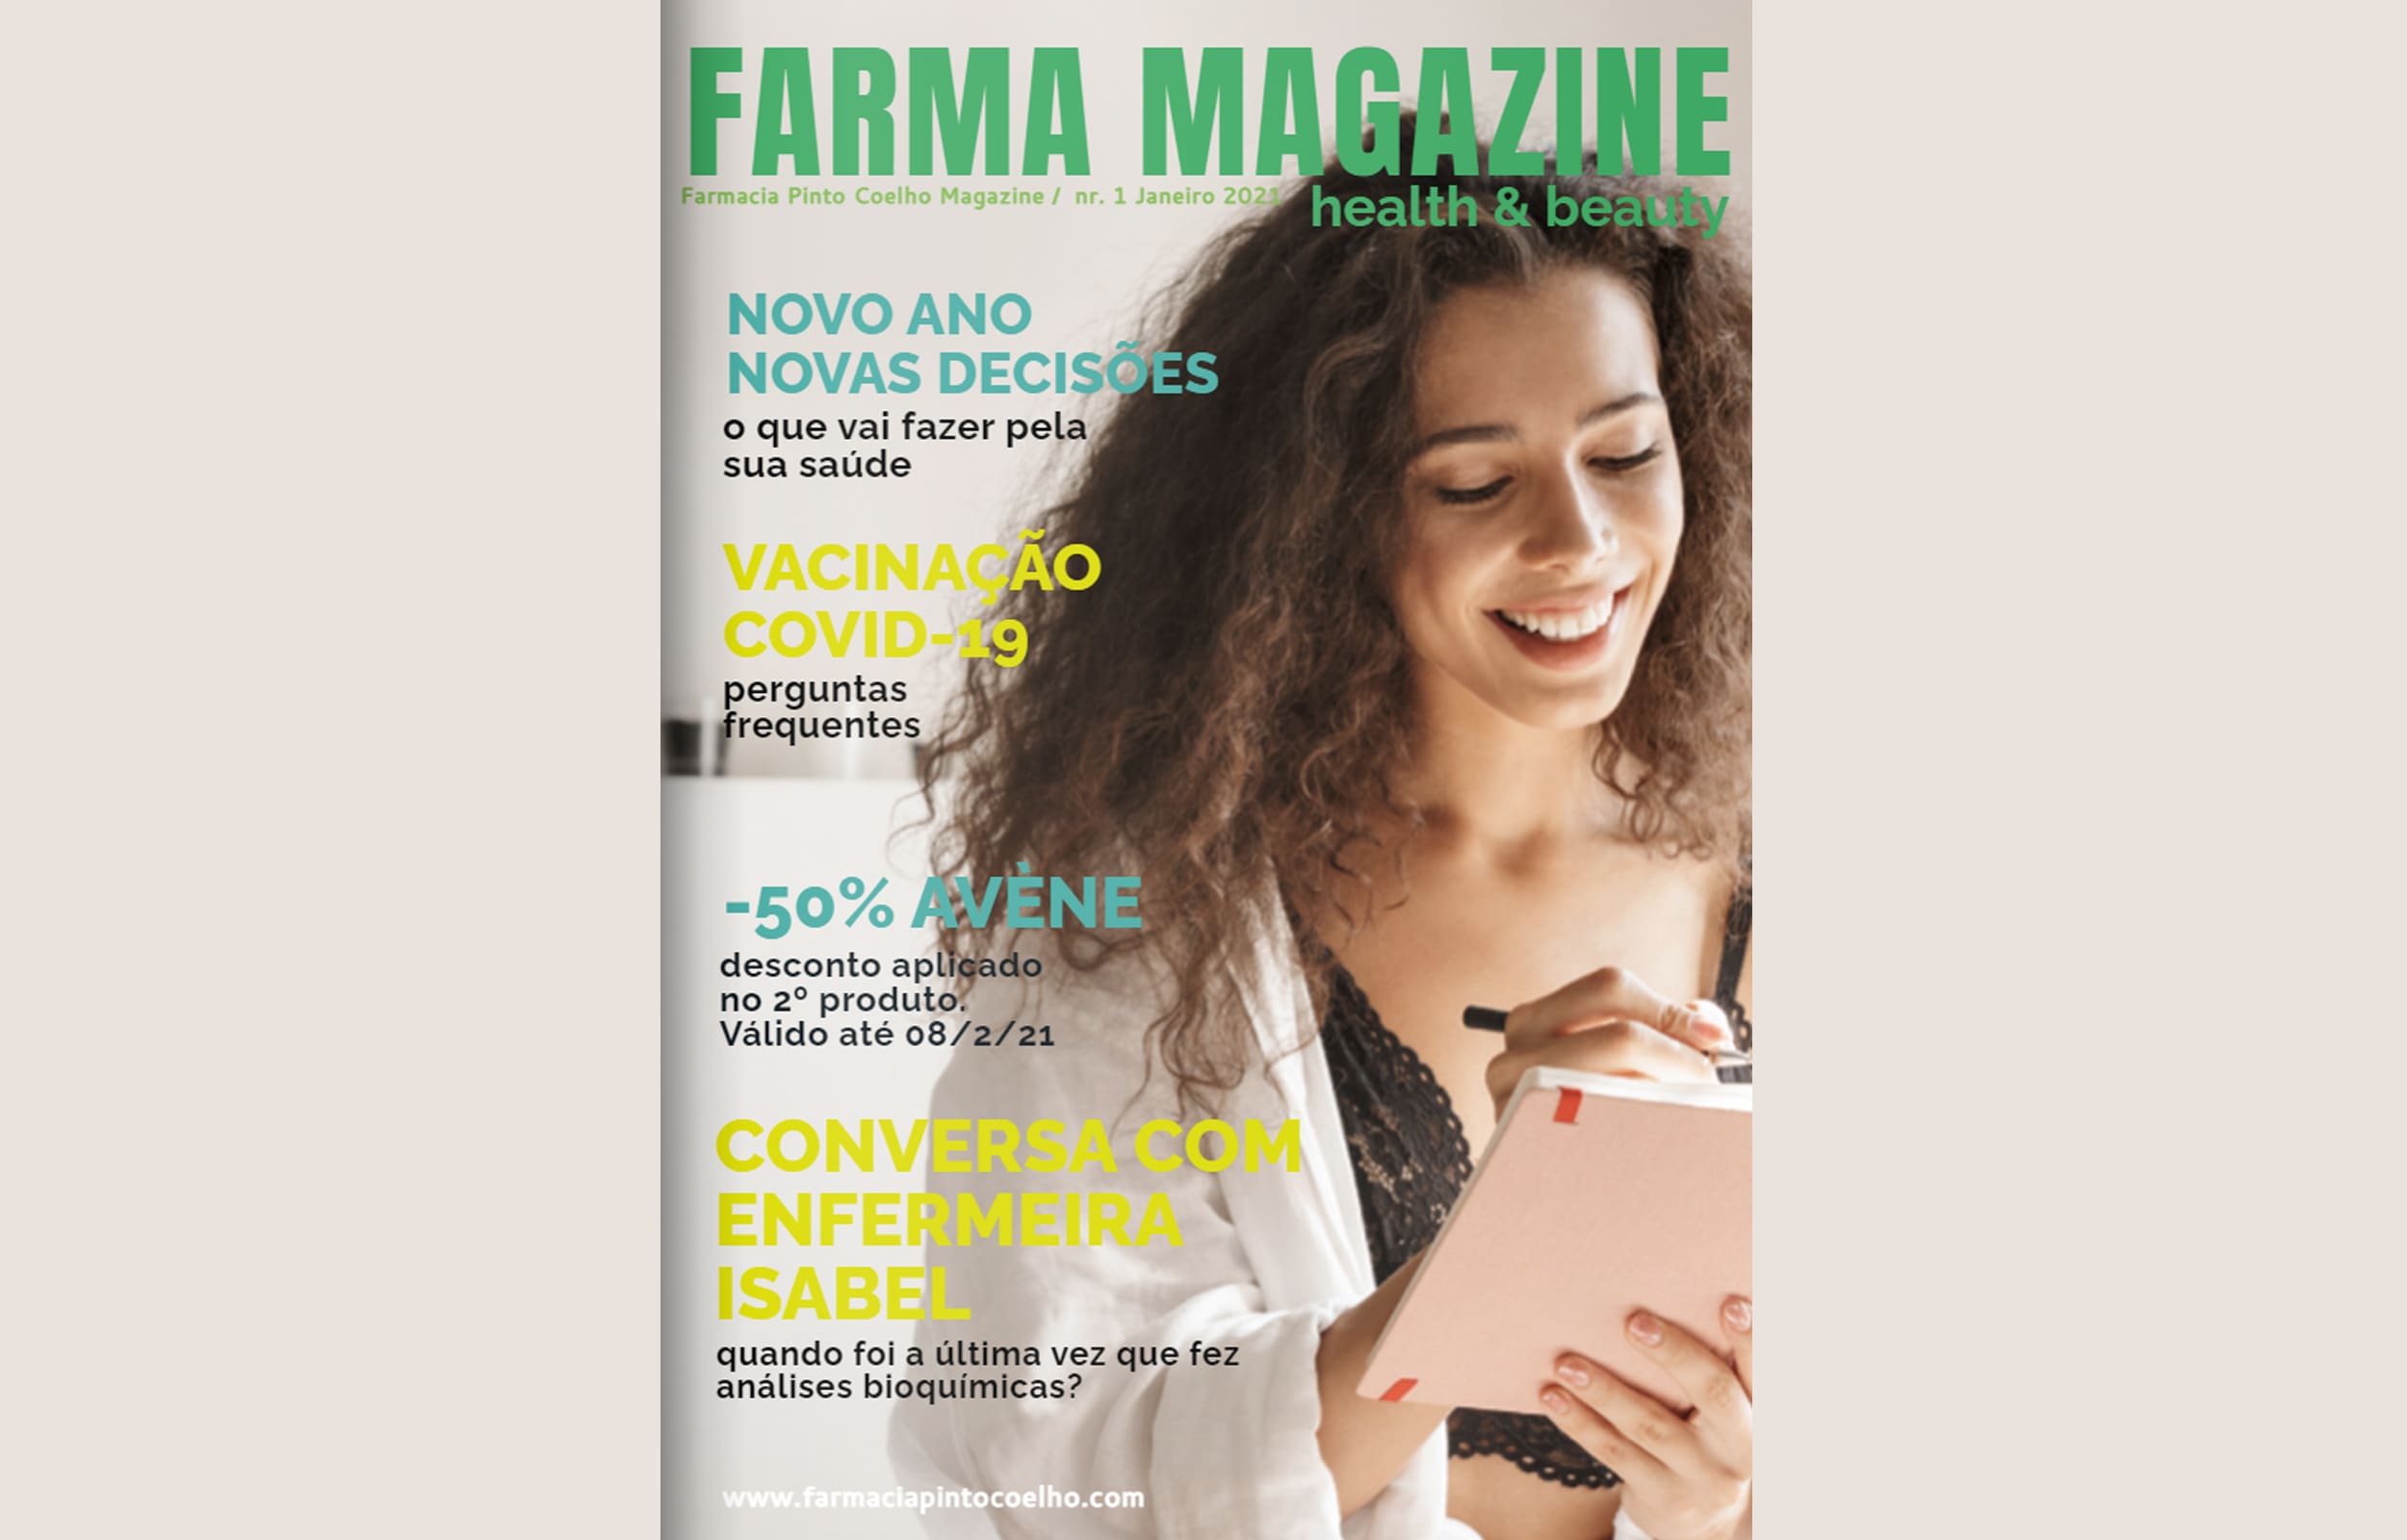 Farma Magazine Health & Beauty N.1